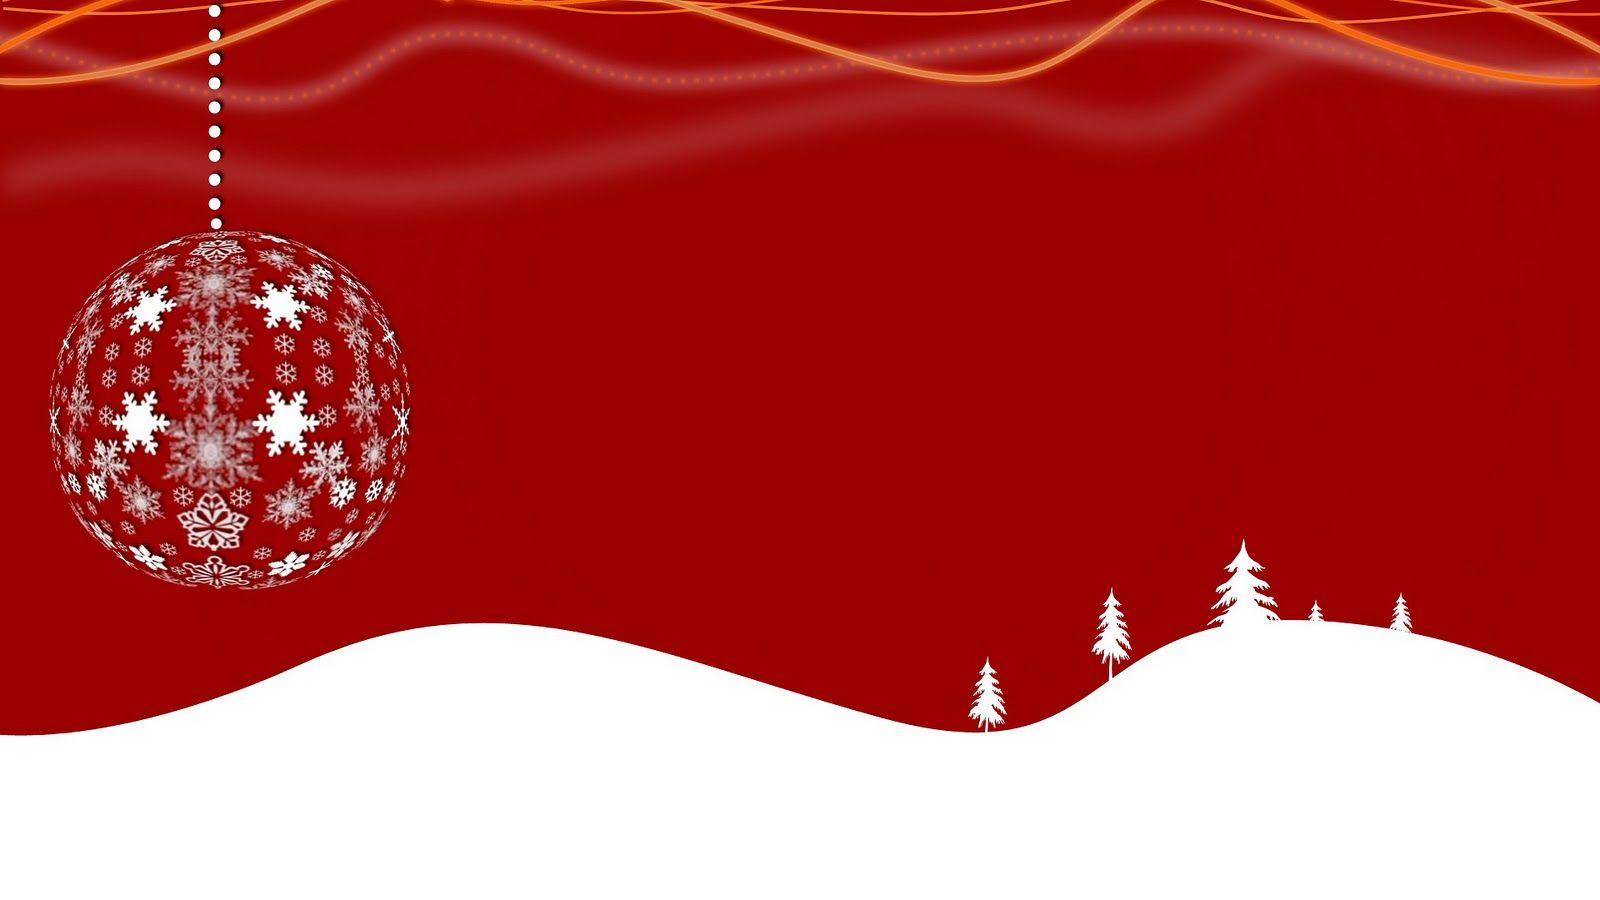 Red Christmas Decoration Wallpaper for Desktop